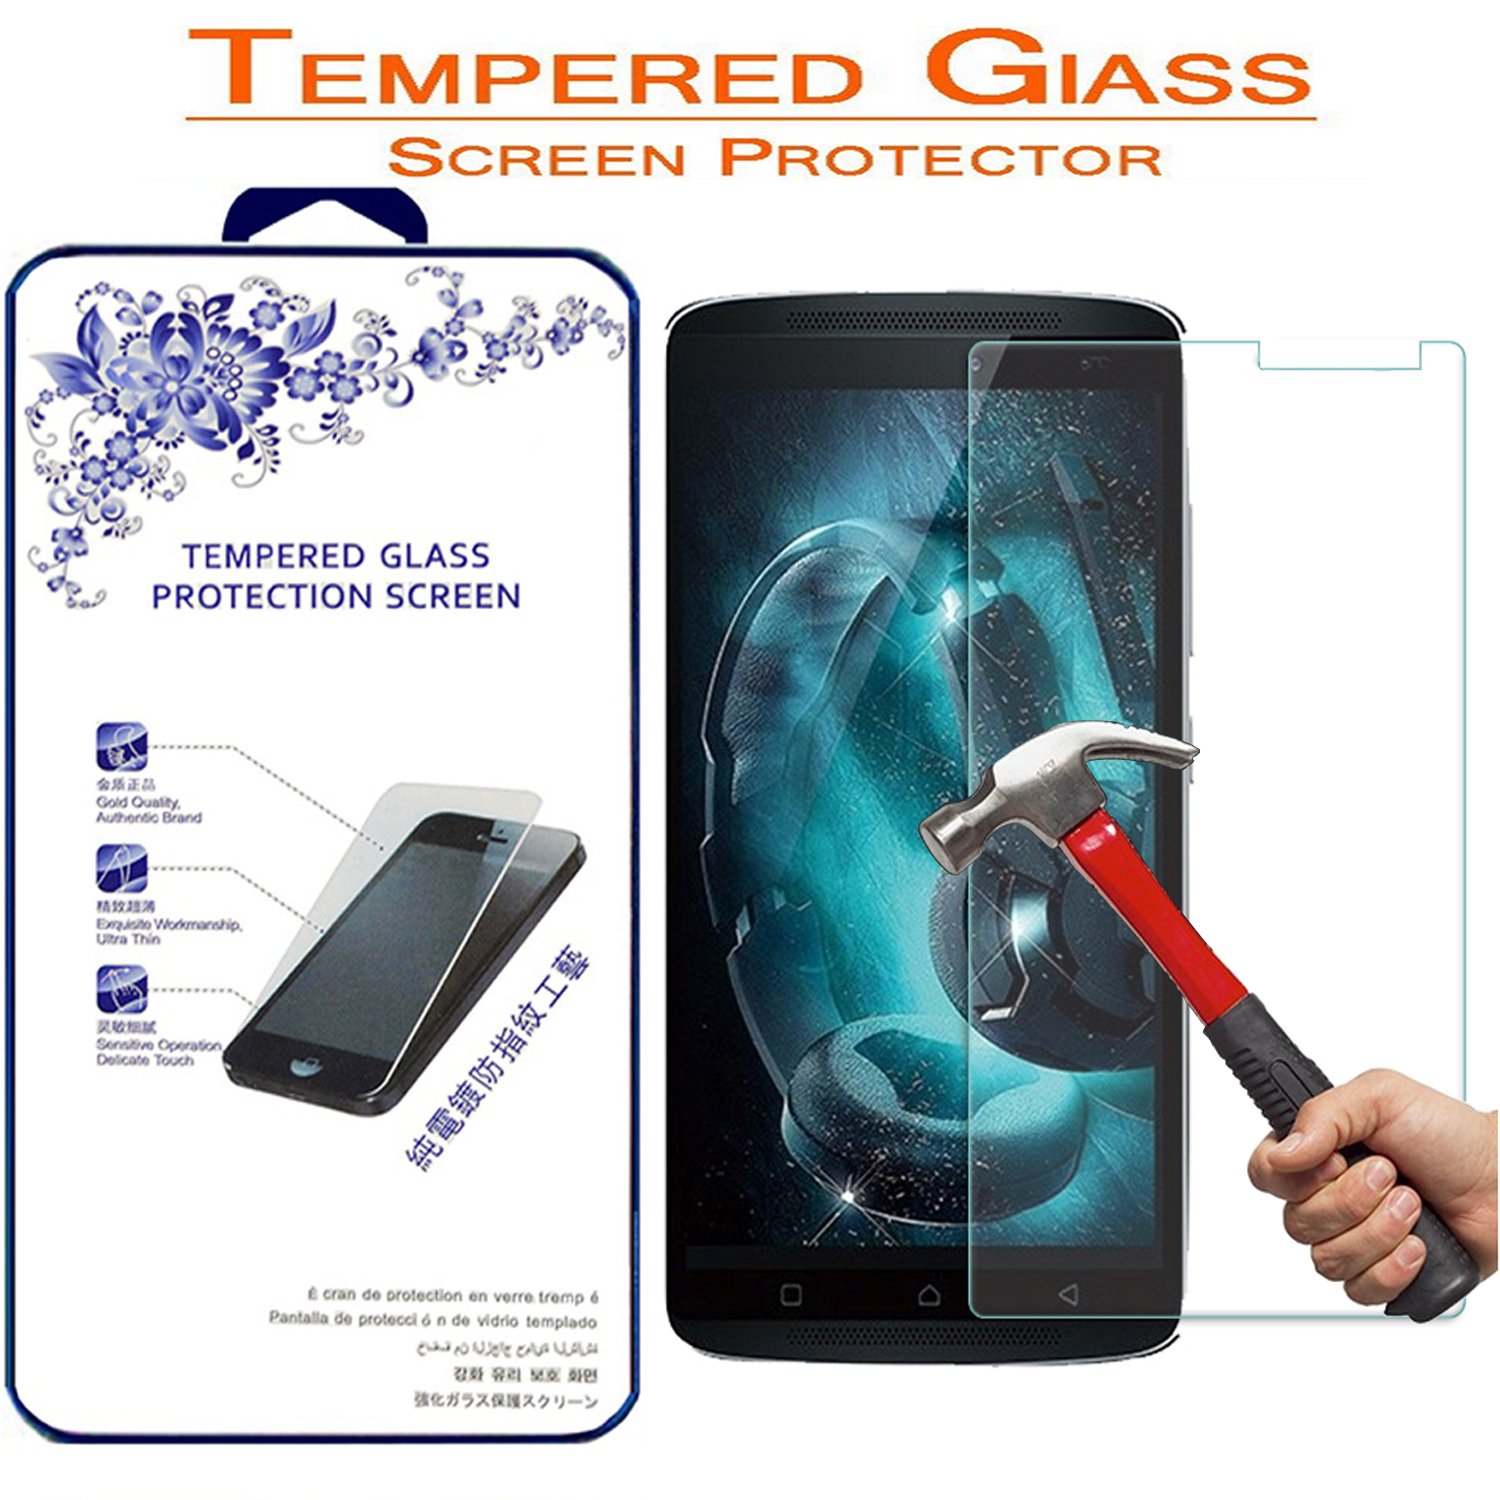 Tempered Glass Asus Zenfone 2 Laser 1500x1500 Wallpaper Teahub Io